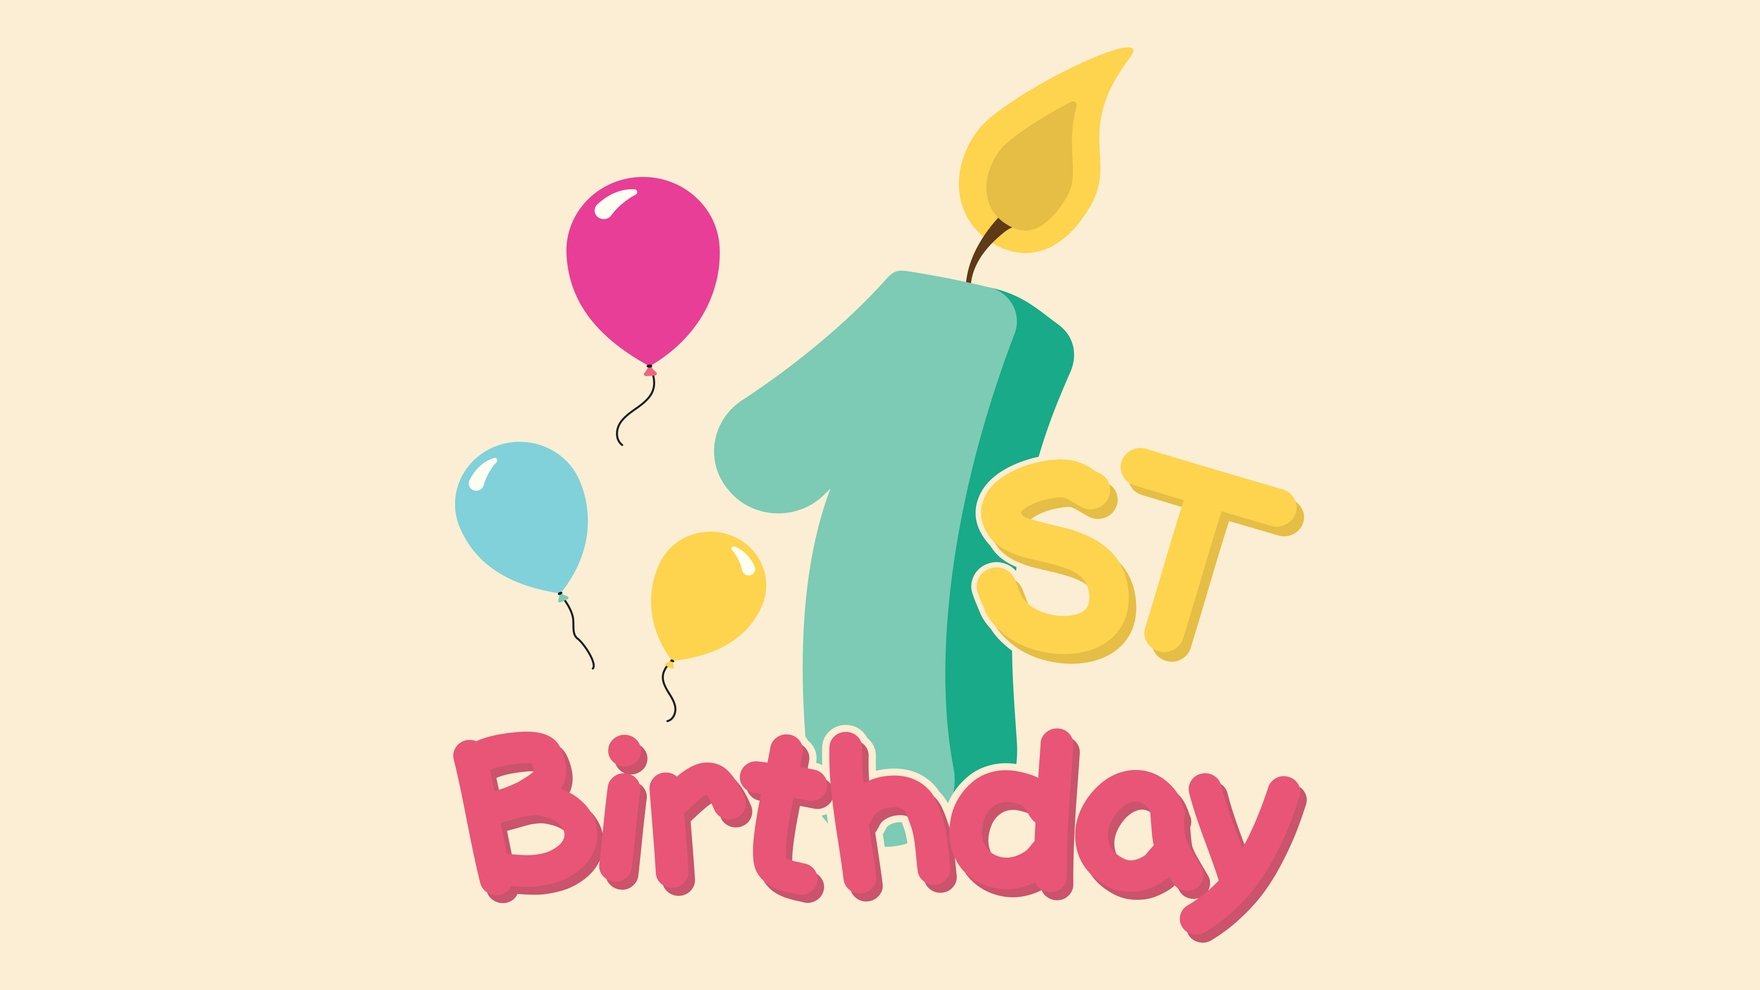 Free Happy 1st Birthday Background - Download in Illustrator, EPS, SVG, JPG, PNG